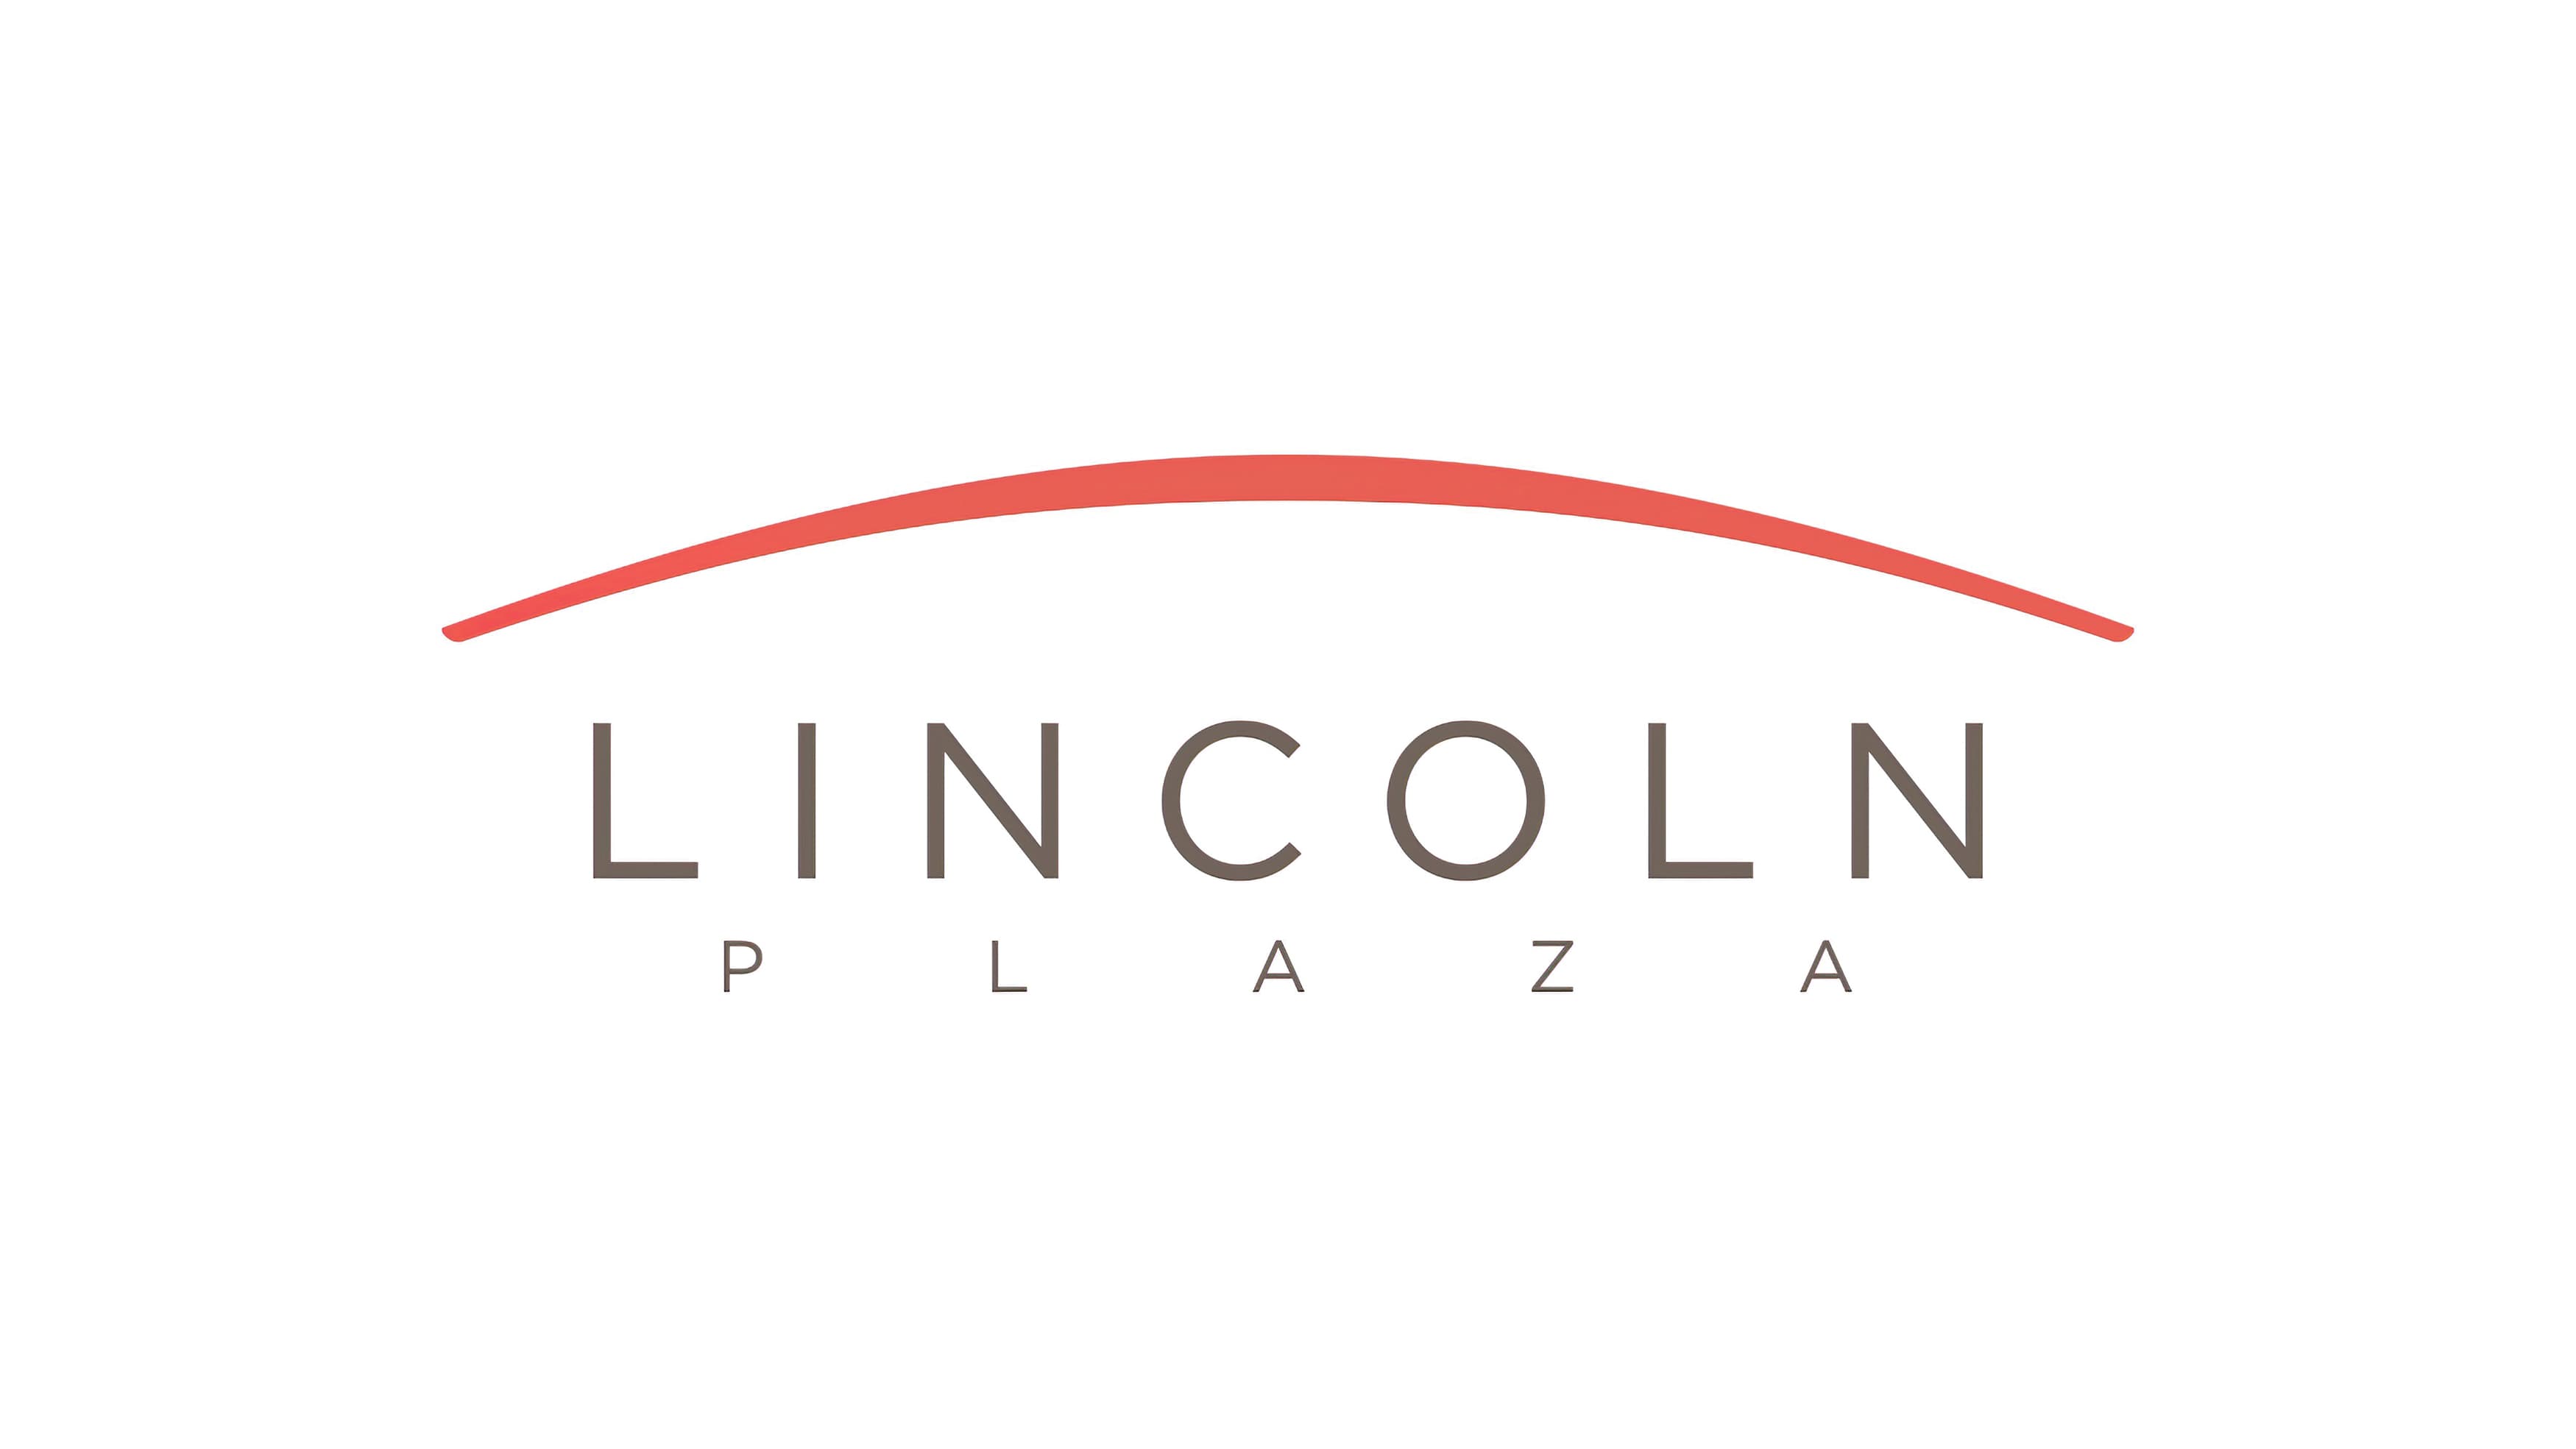 RSM designed logo branding for Lincoln Plaza located in Costa Rica